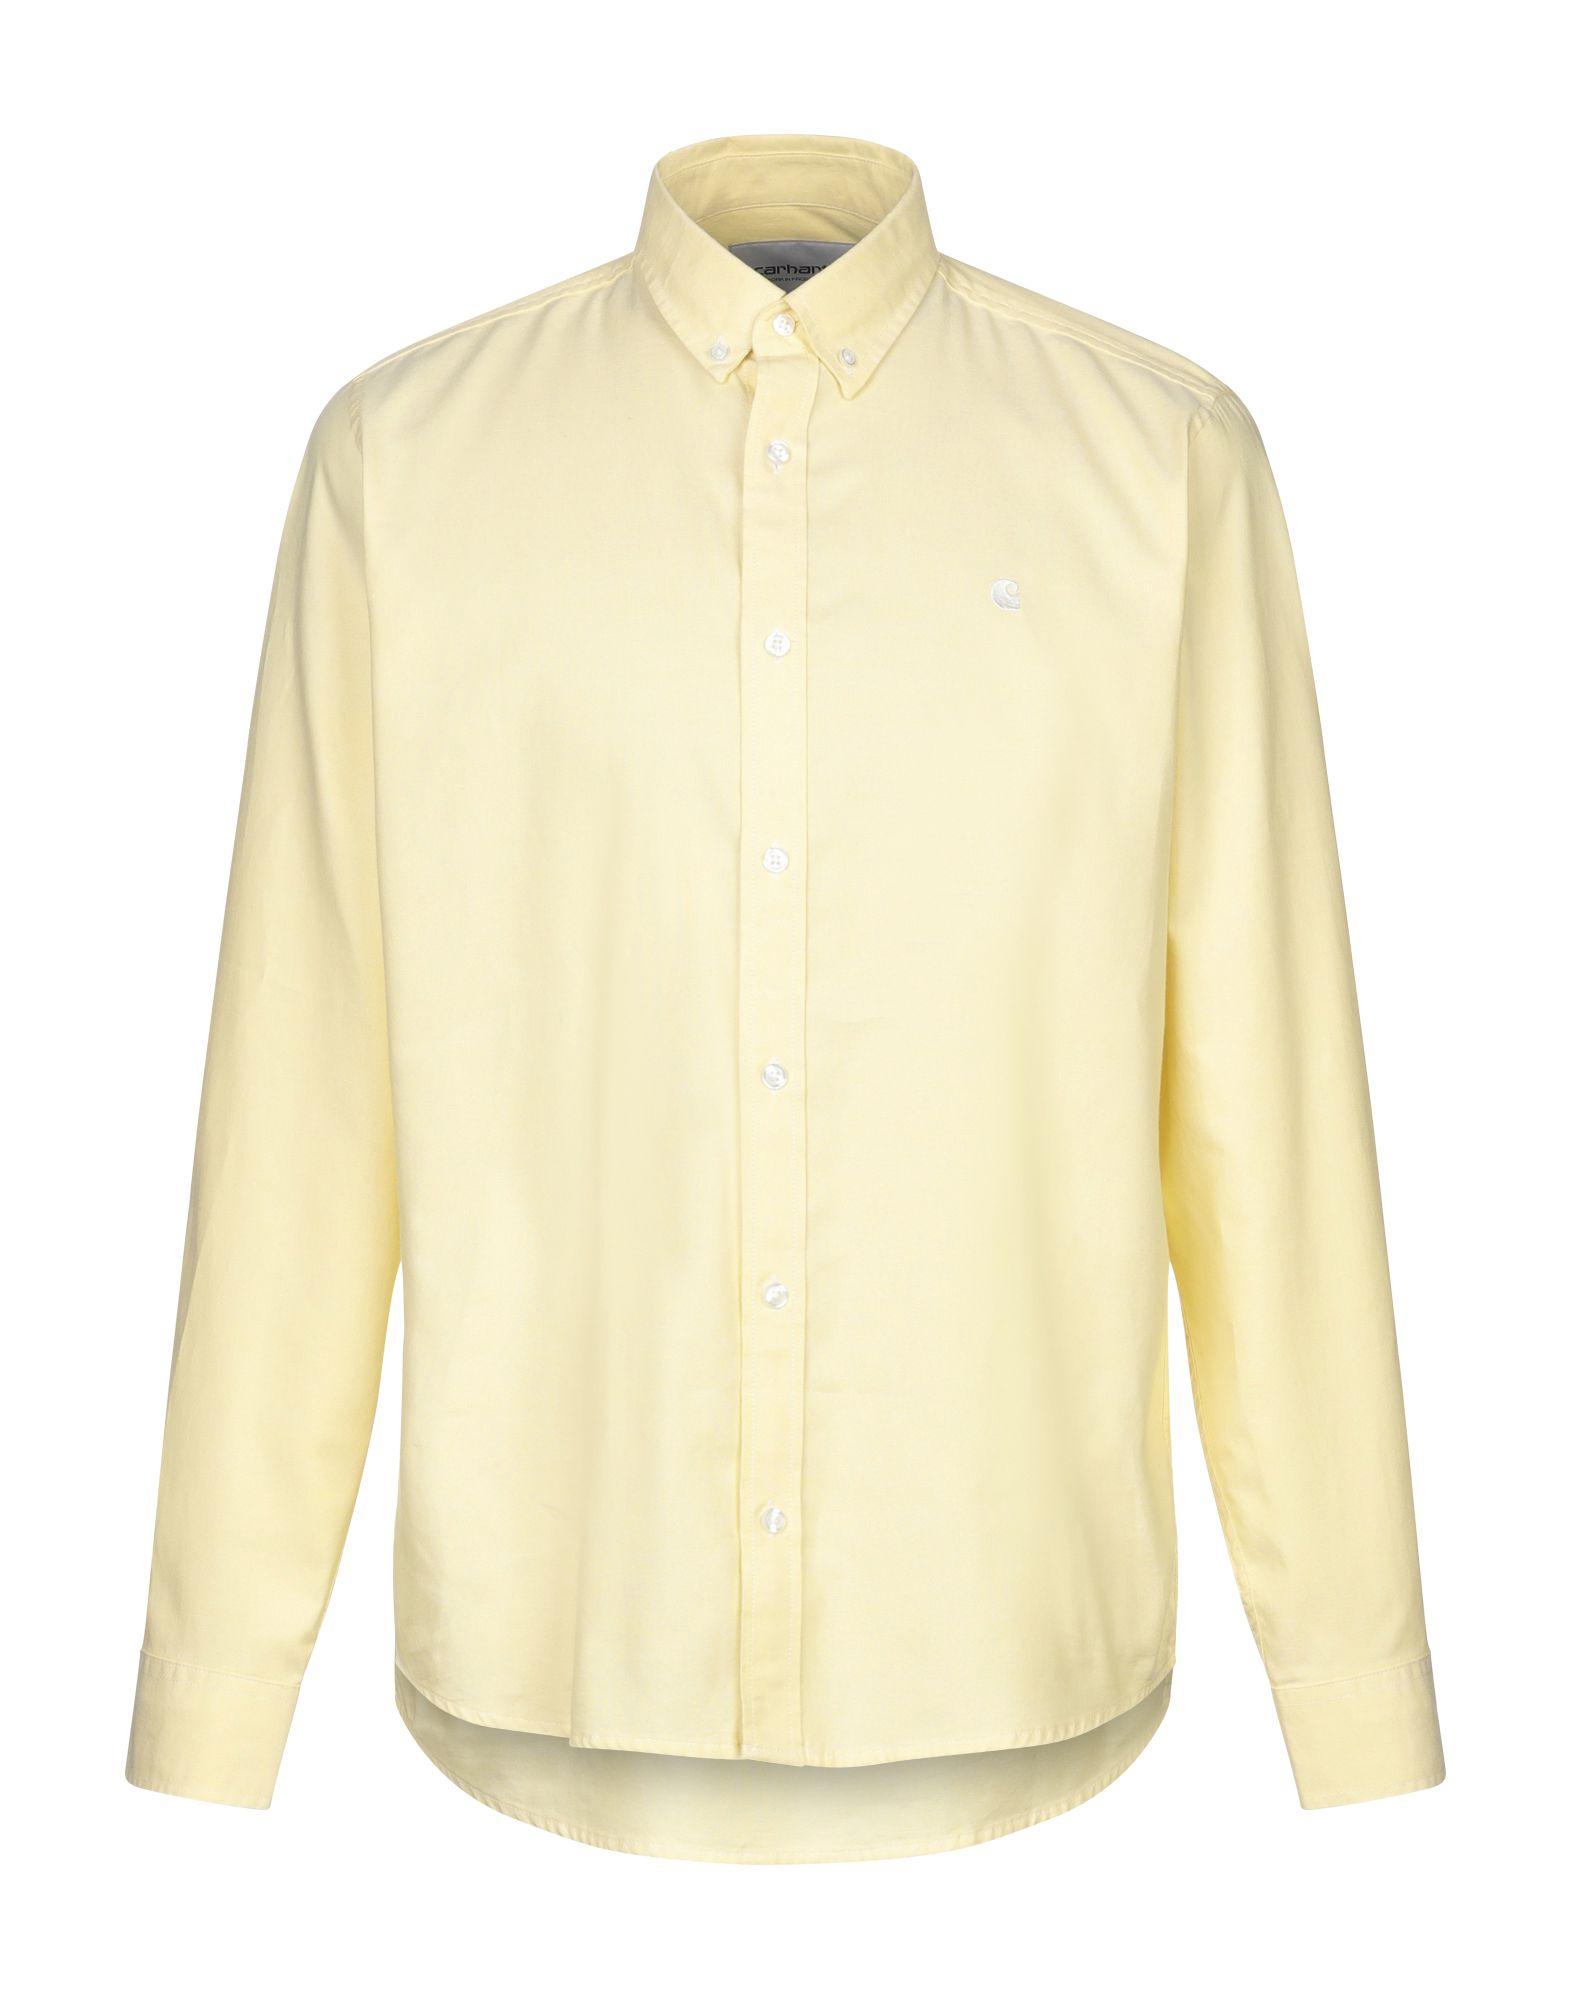 Carhartt Cotton Shirt in Light Yellow (Yellow) for Men - Lyst